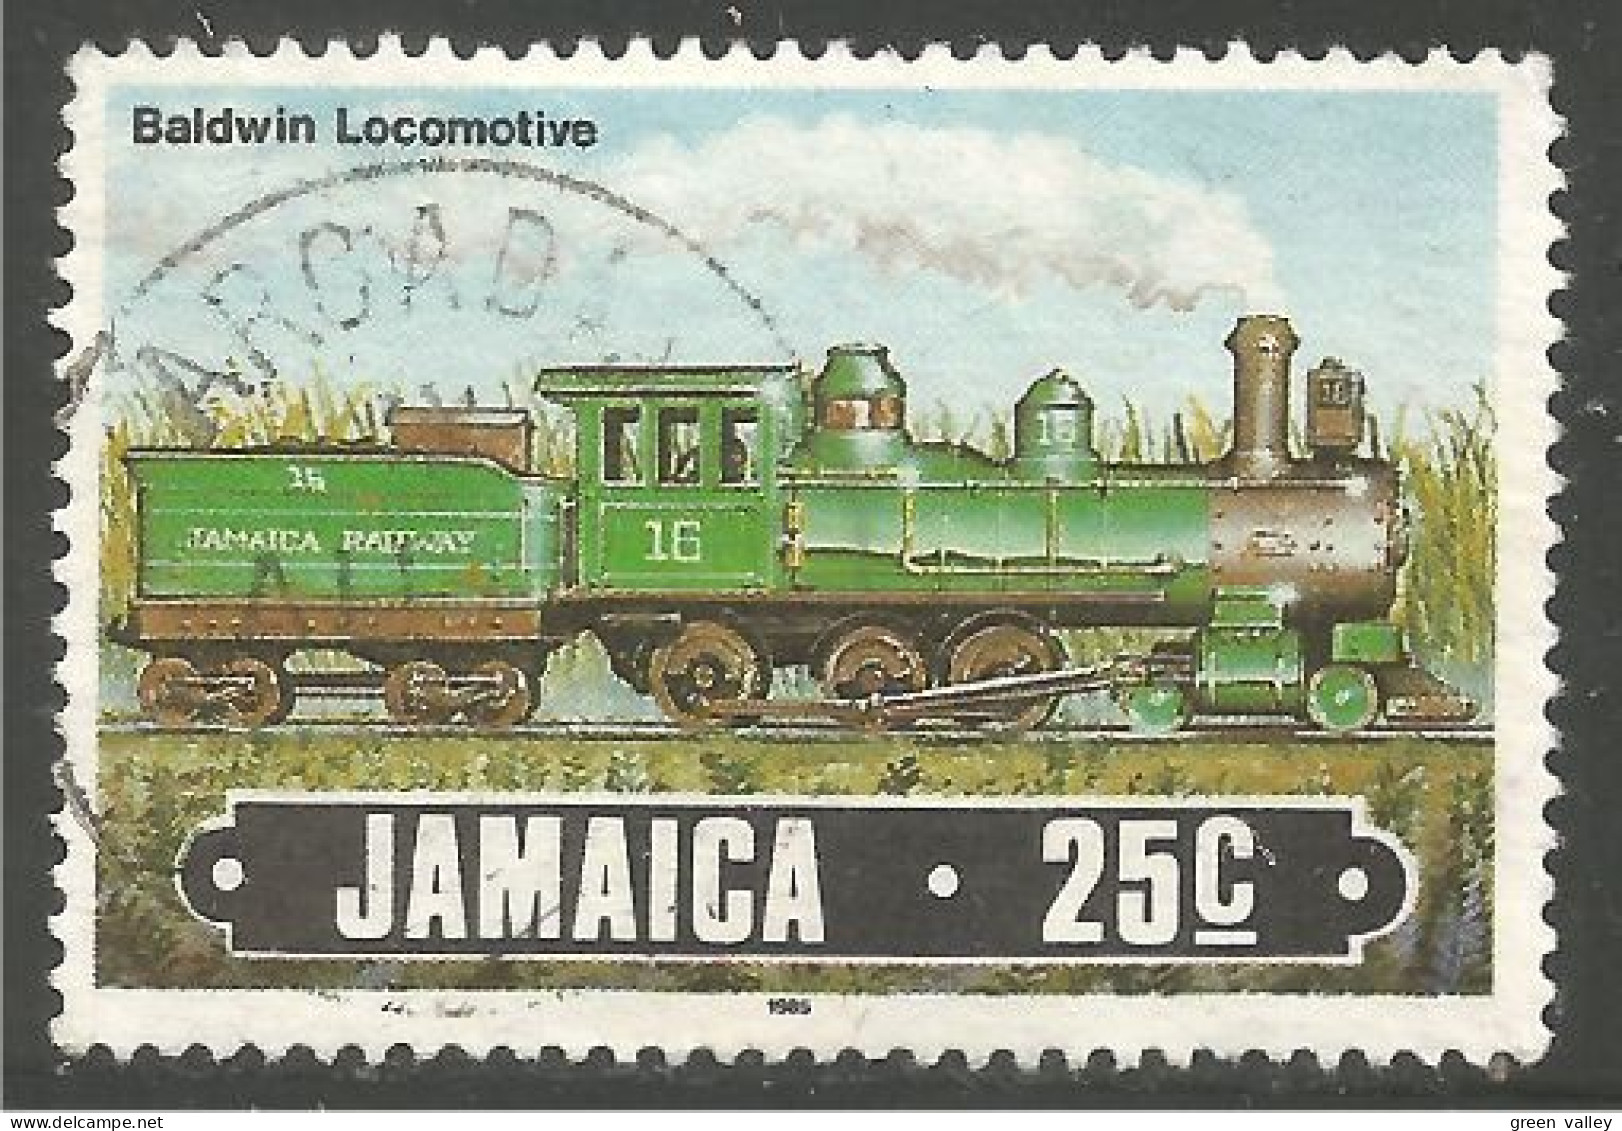 TR-70c Jamaica Train Locomotive Lokomotive Zug Treno - Trains